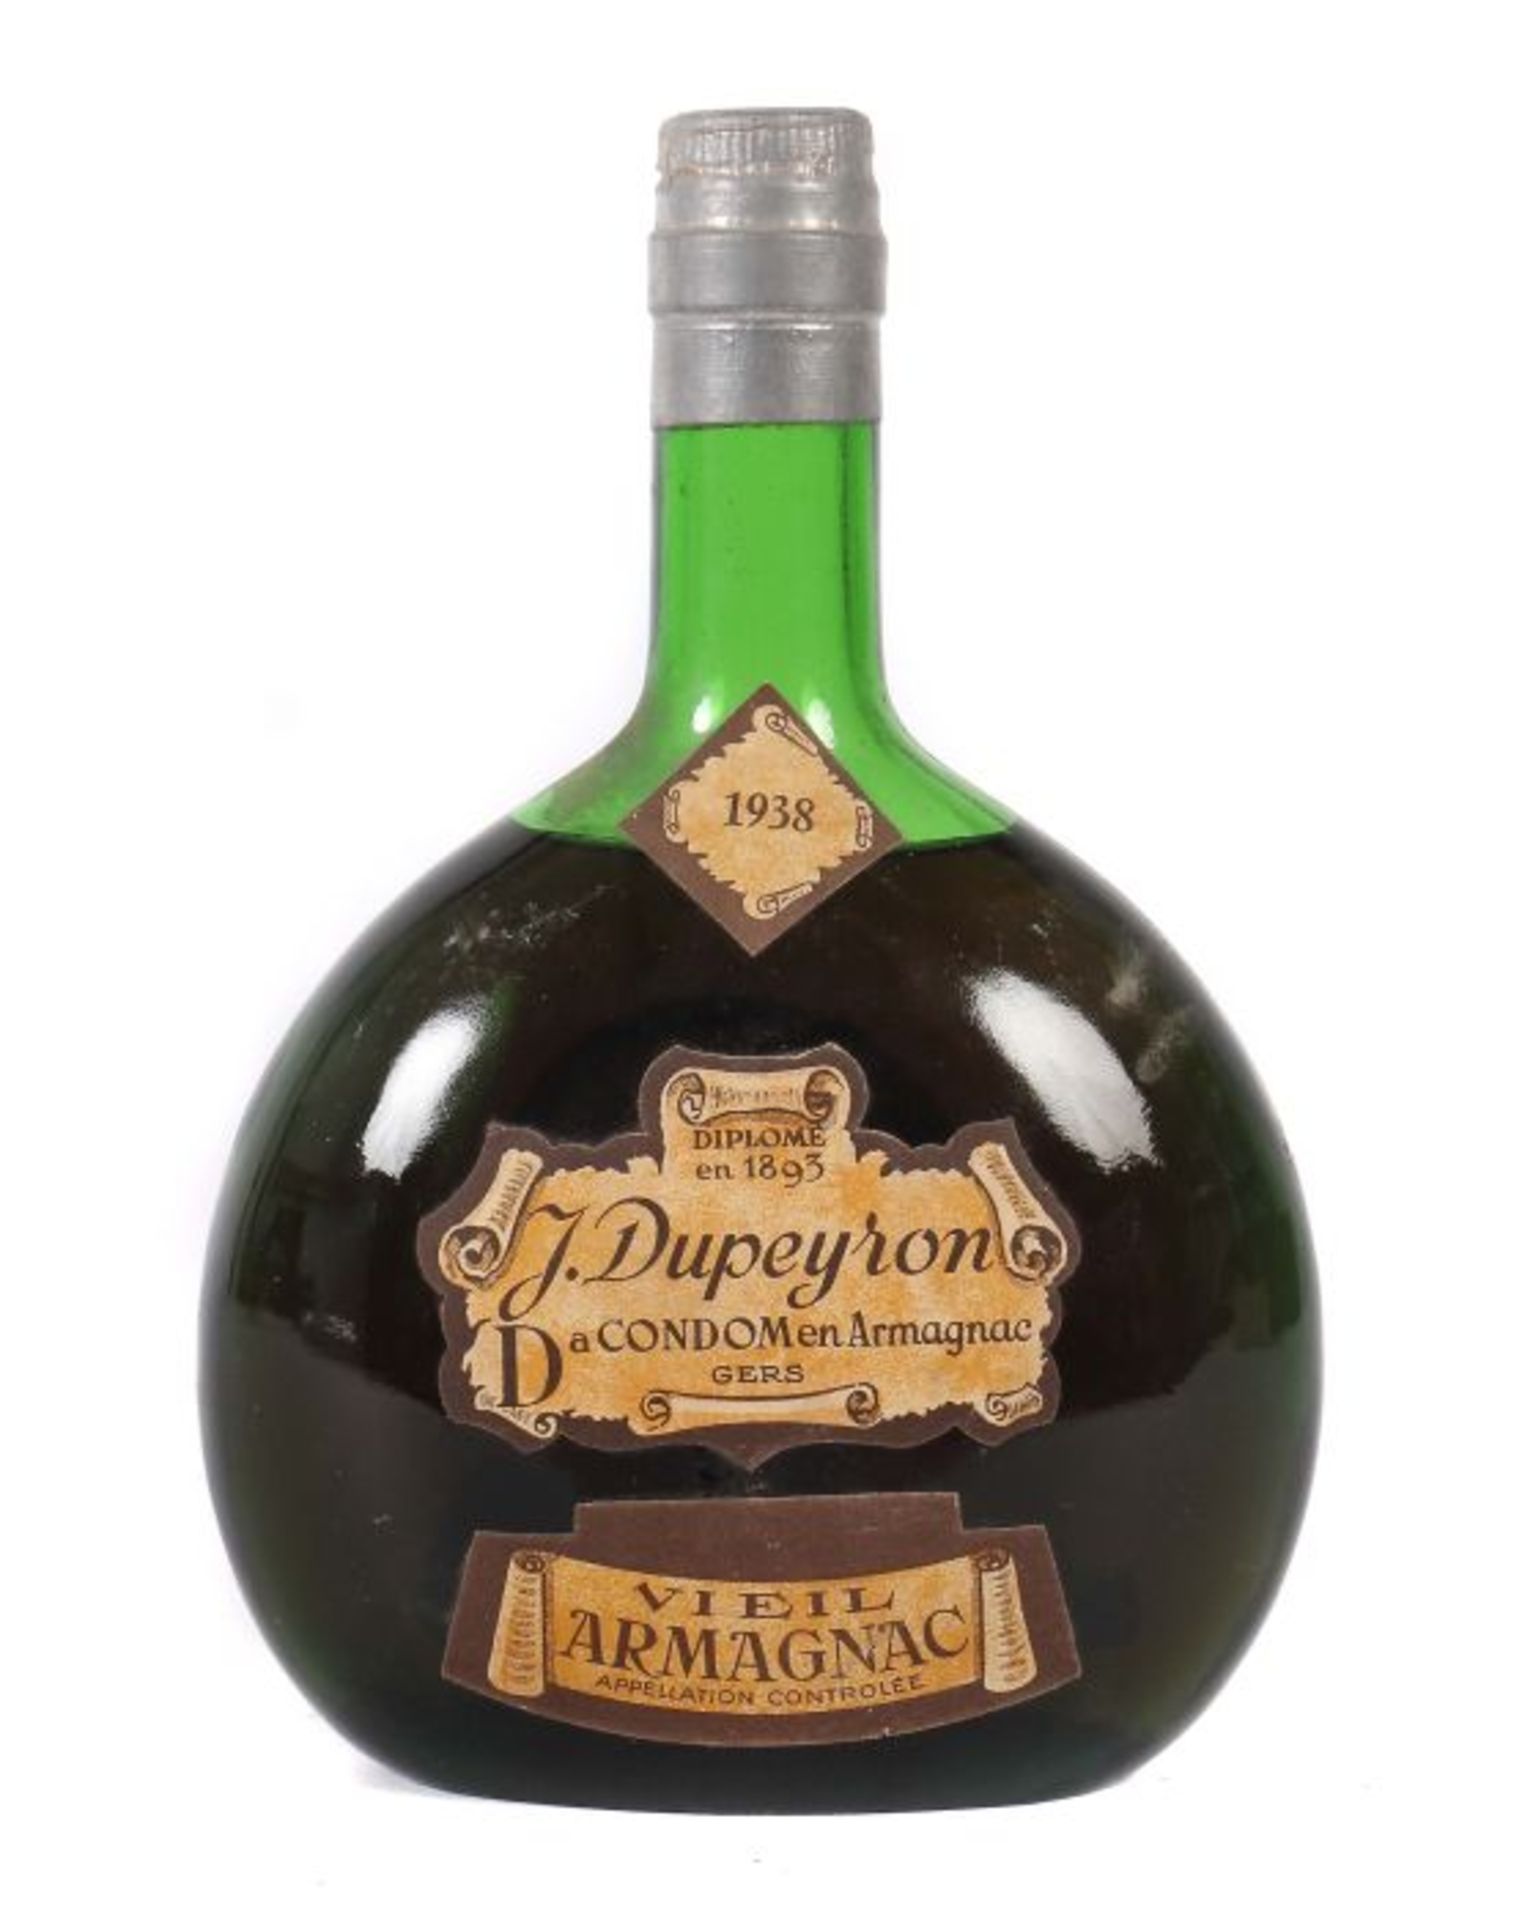 ArmagnacJ. Dupeyron, Da Condom en Armagnac Gers, Vieil Armagnac, Flasche in Bocksbeutelform,1938er